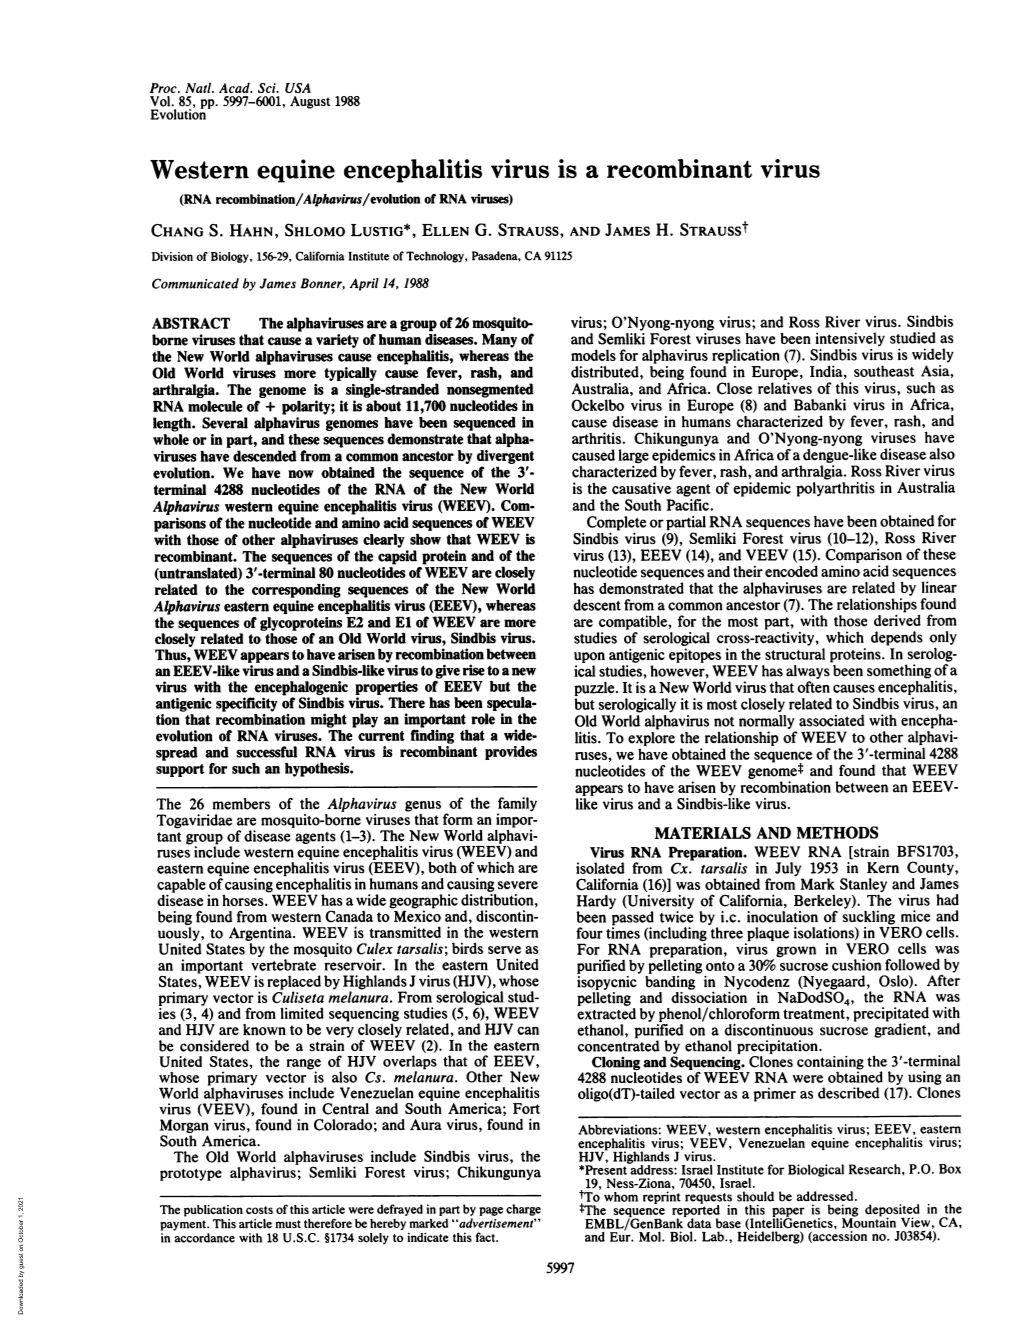 Western Equine Encephalitis Virus Is a Recombinant Virus (RNA Recombination/Alphavirus/Evolution of RNA Viruses) CHANG S